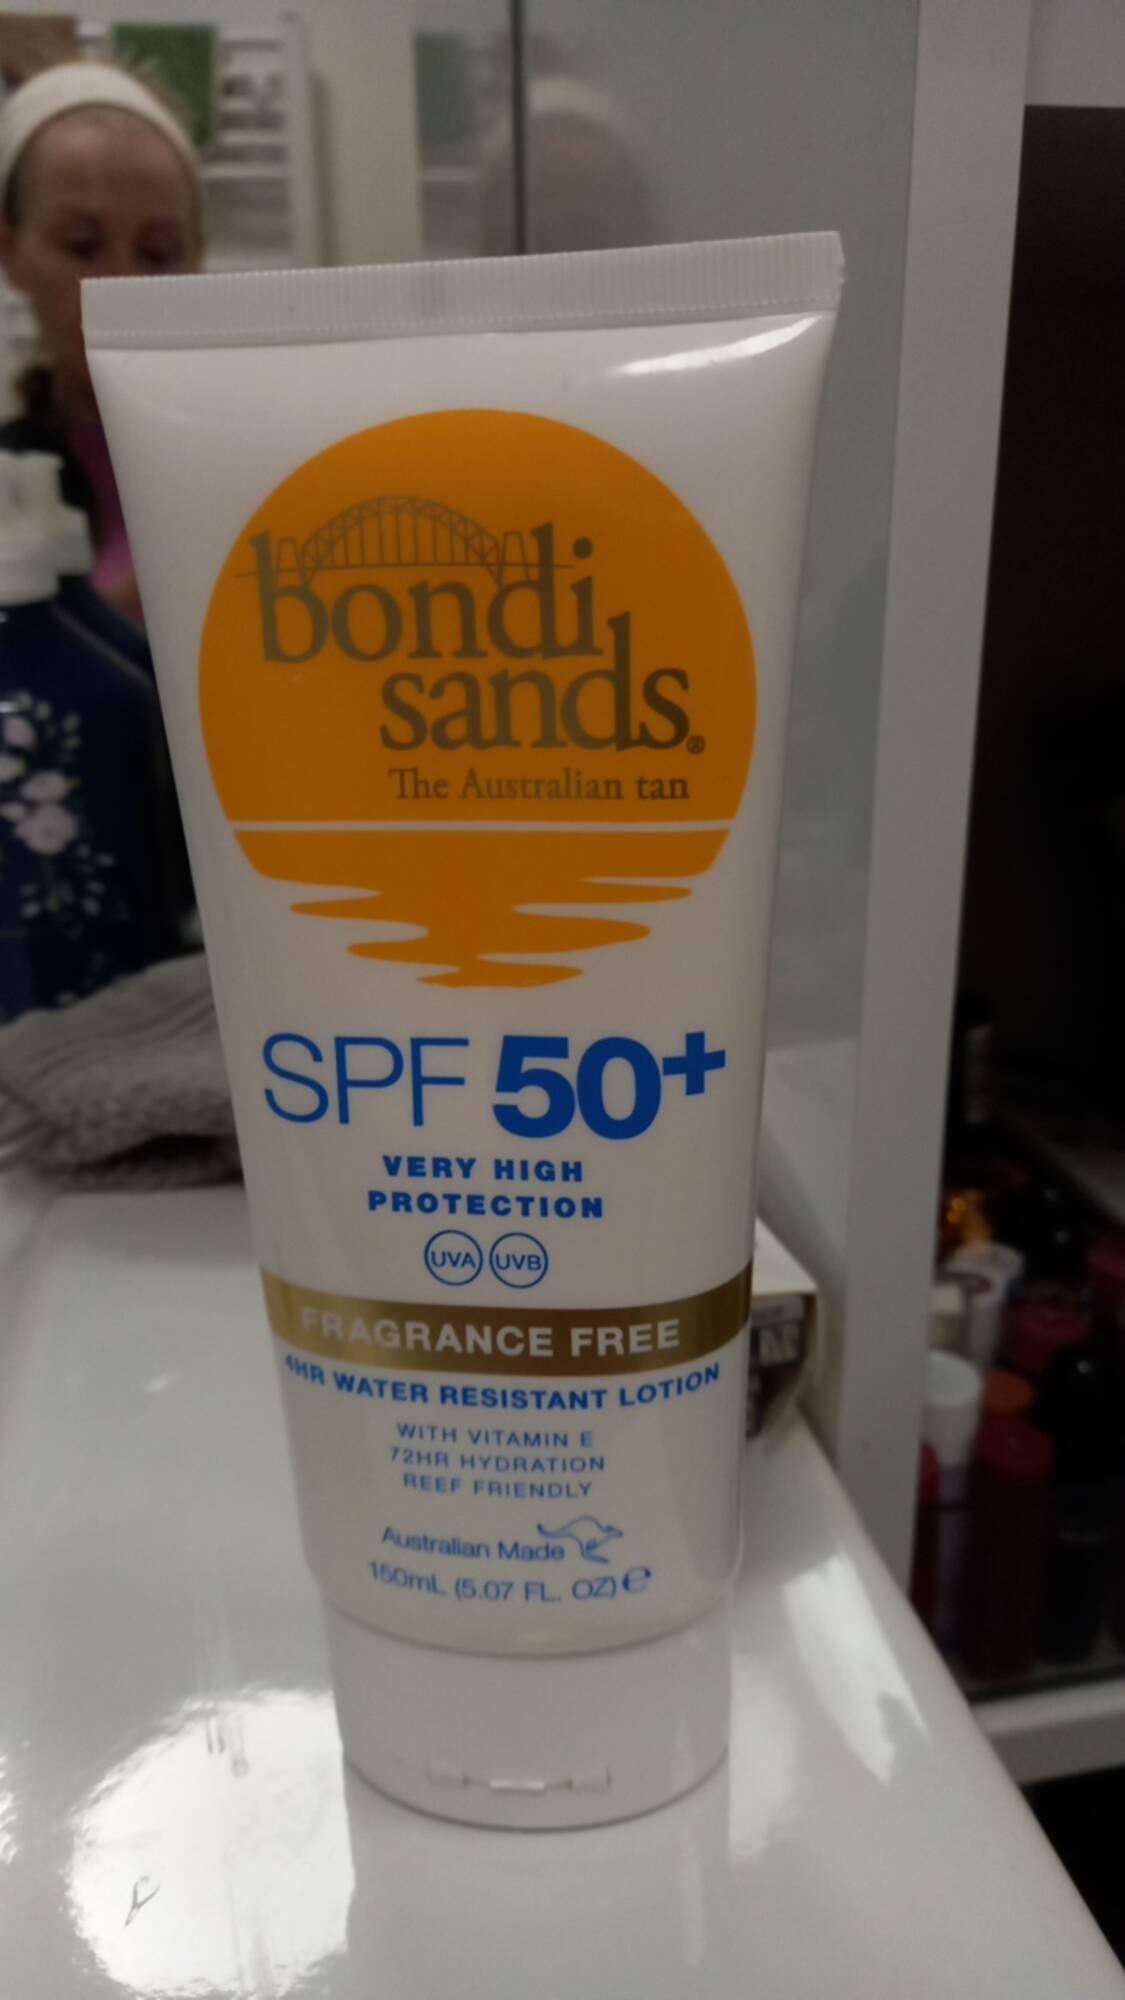 BONDI SANDS - The australian tan Very high protection SPF 50+